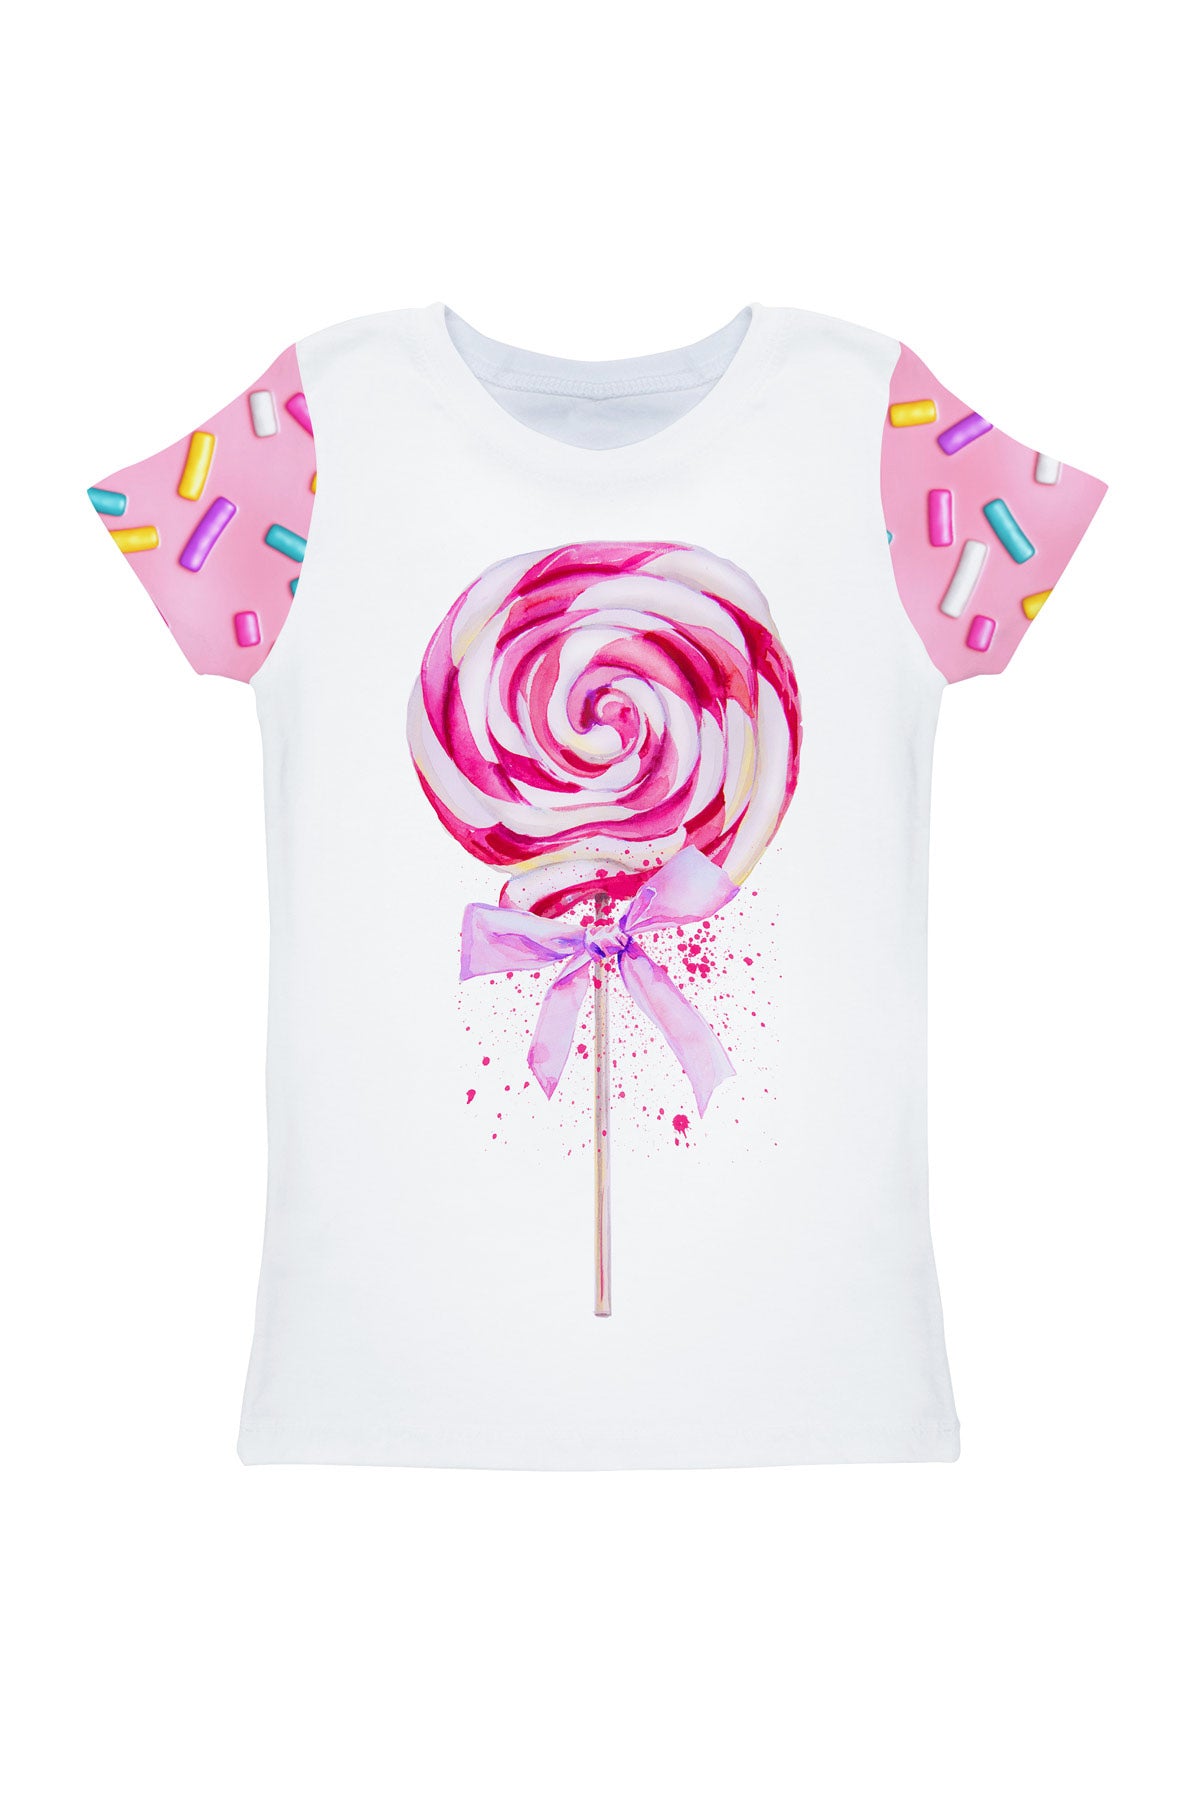 Sugar Baby Zoe White Pink Lollypop Print Cute Summer T-Shirt - Kids - Pineapple Clothing